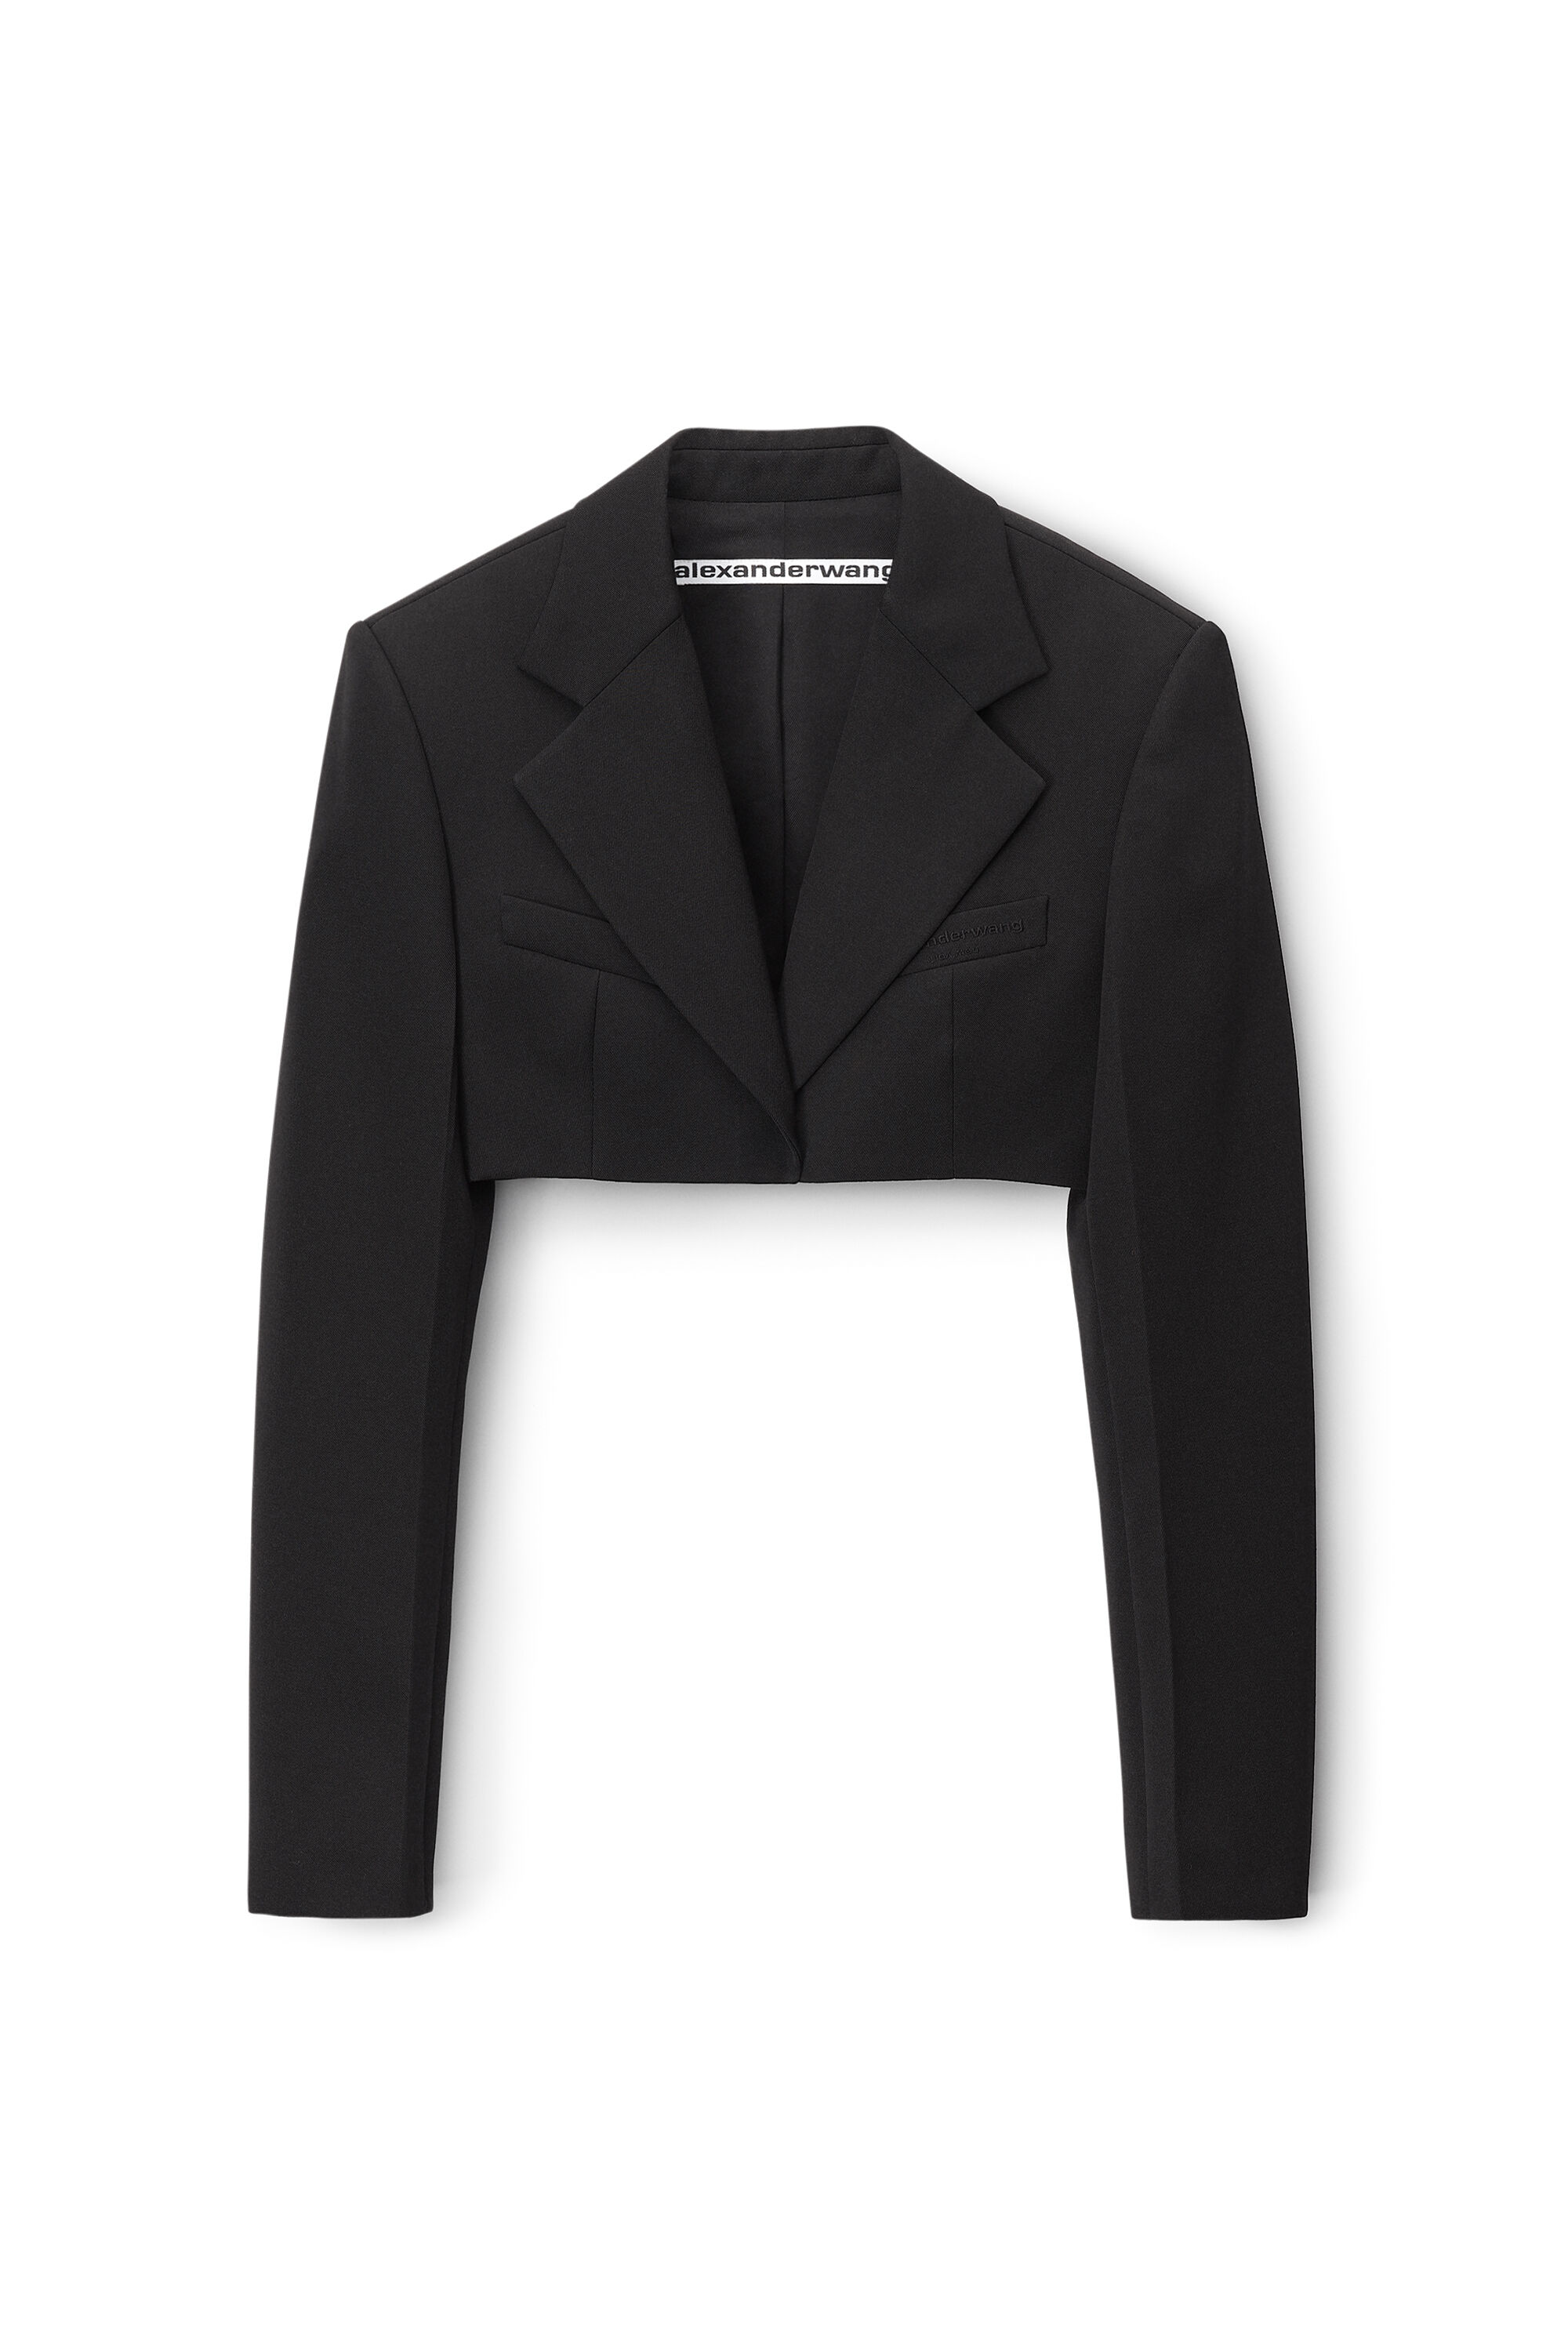 alexanderwang cropped tuxedo blazer in wool tailoring BLACK